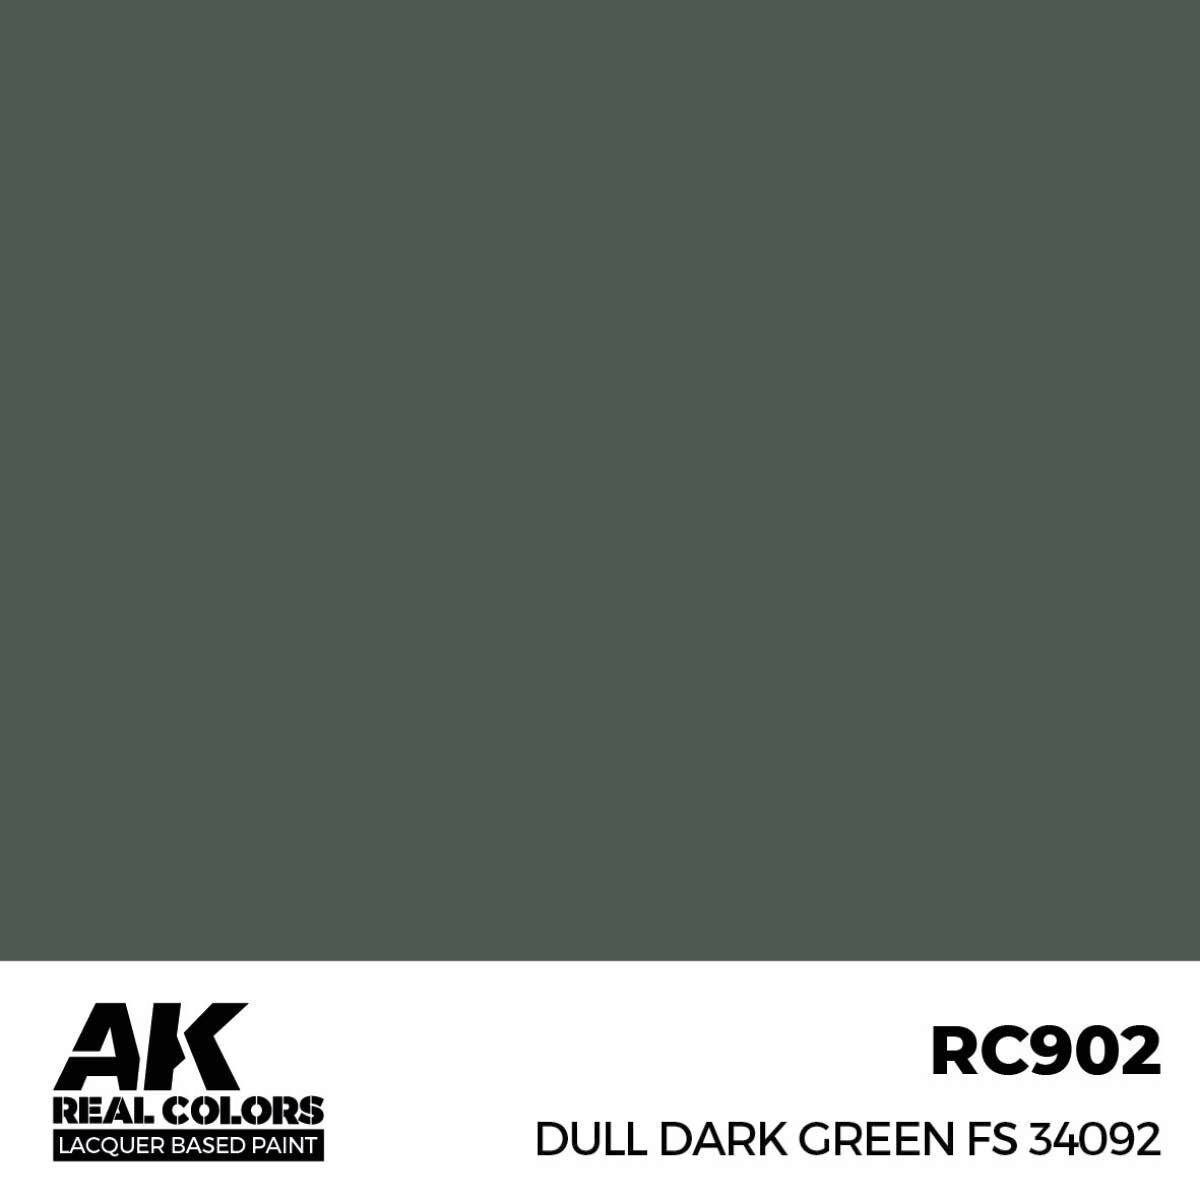 AK RC902 Real Colors Dull Dark Green FS 34092 17 ml.